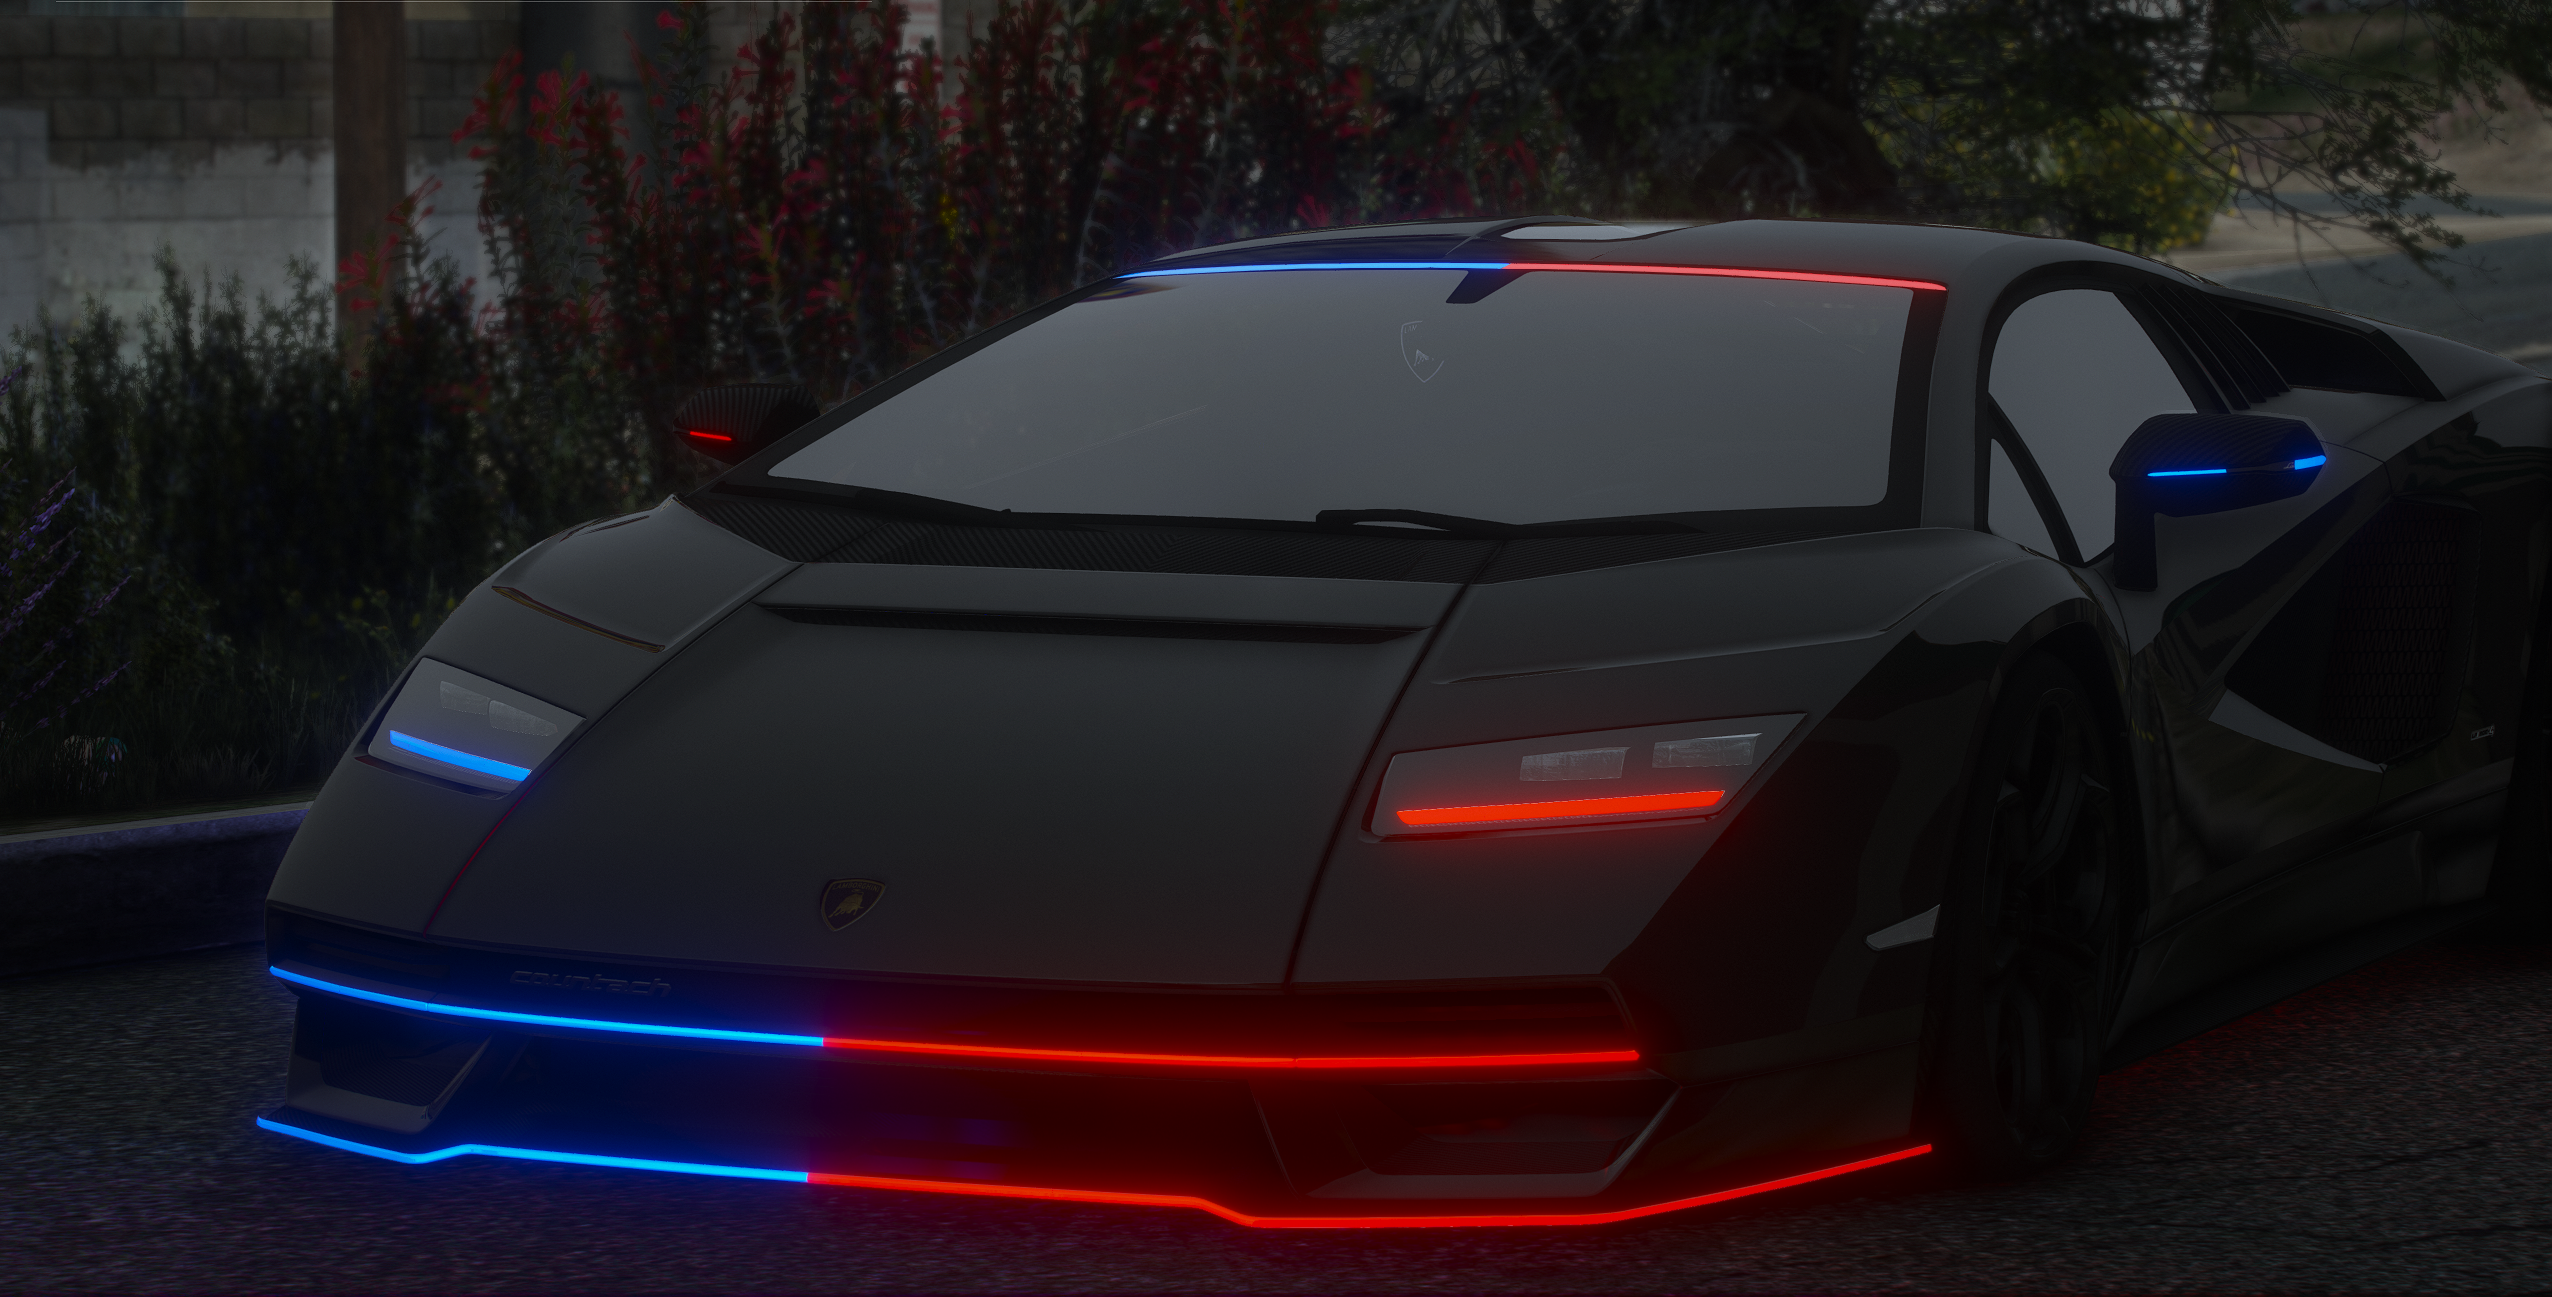 2022 Lamborghini Countach LPI 800-4 FiveM Police Vehicle